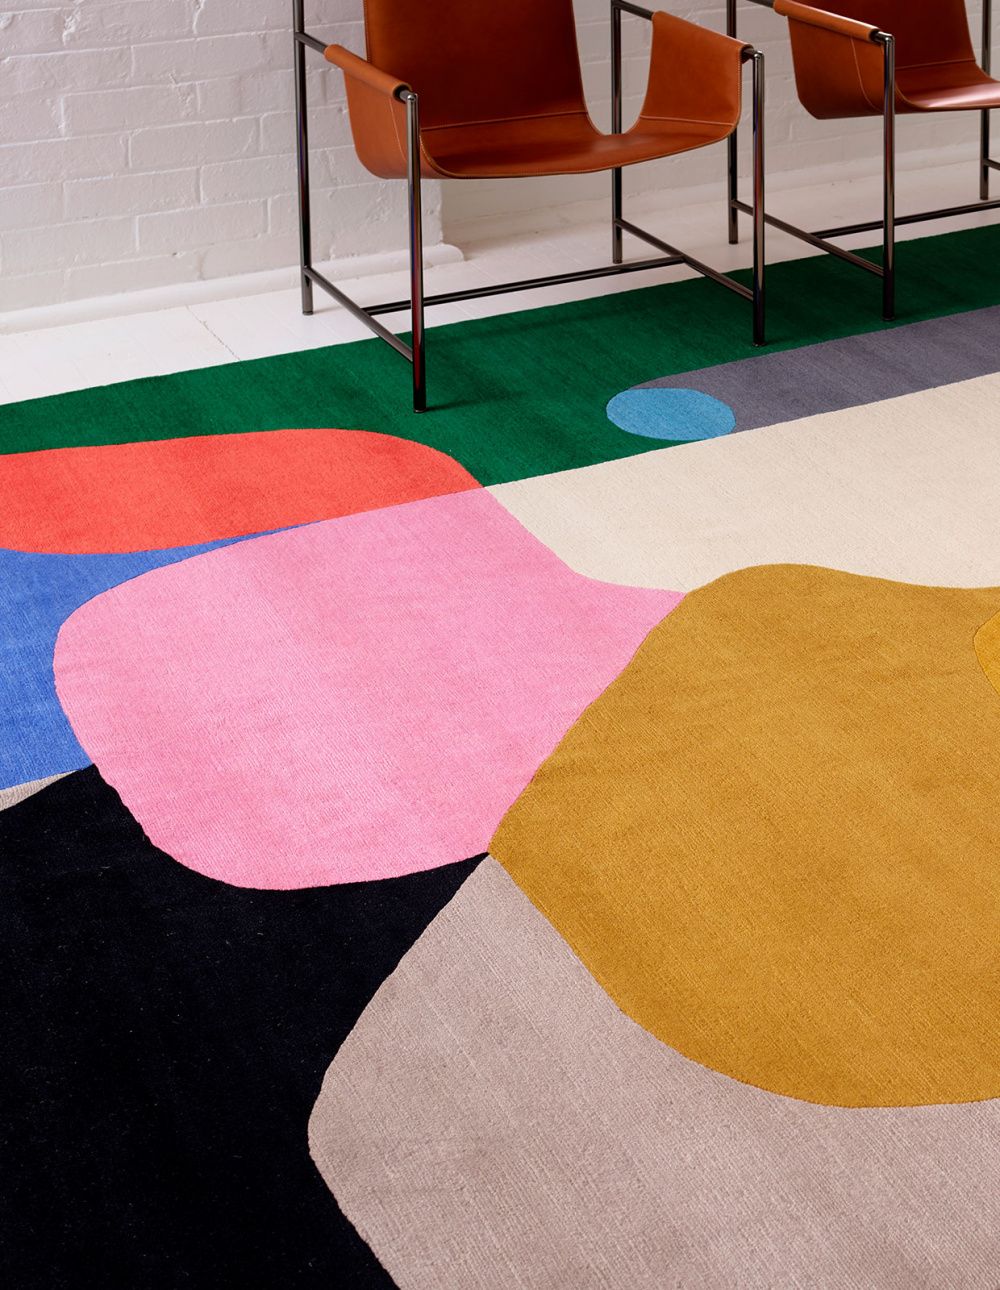 What are designer rugs?